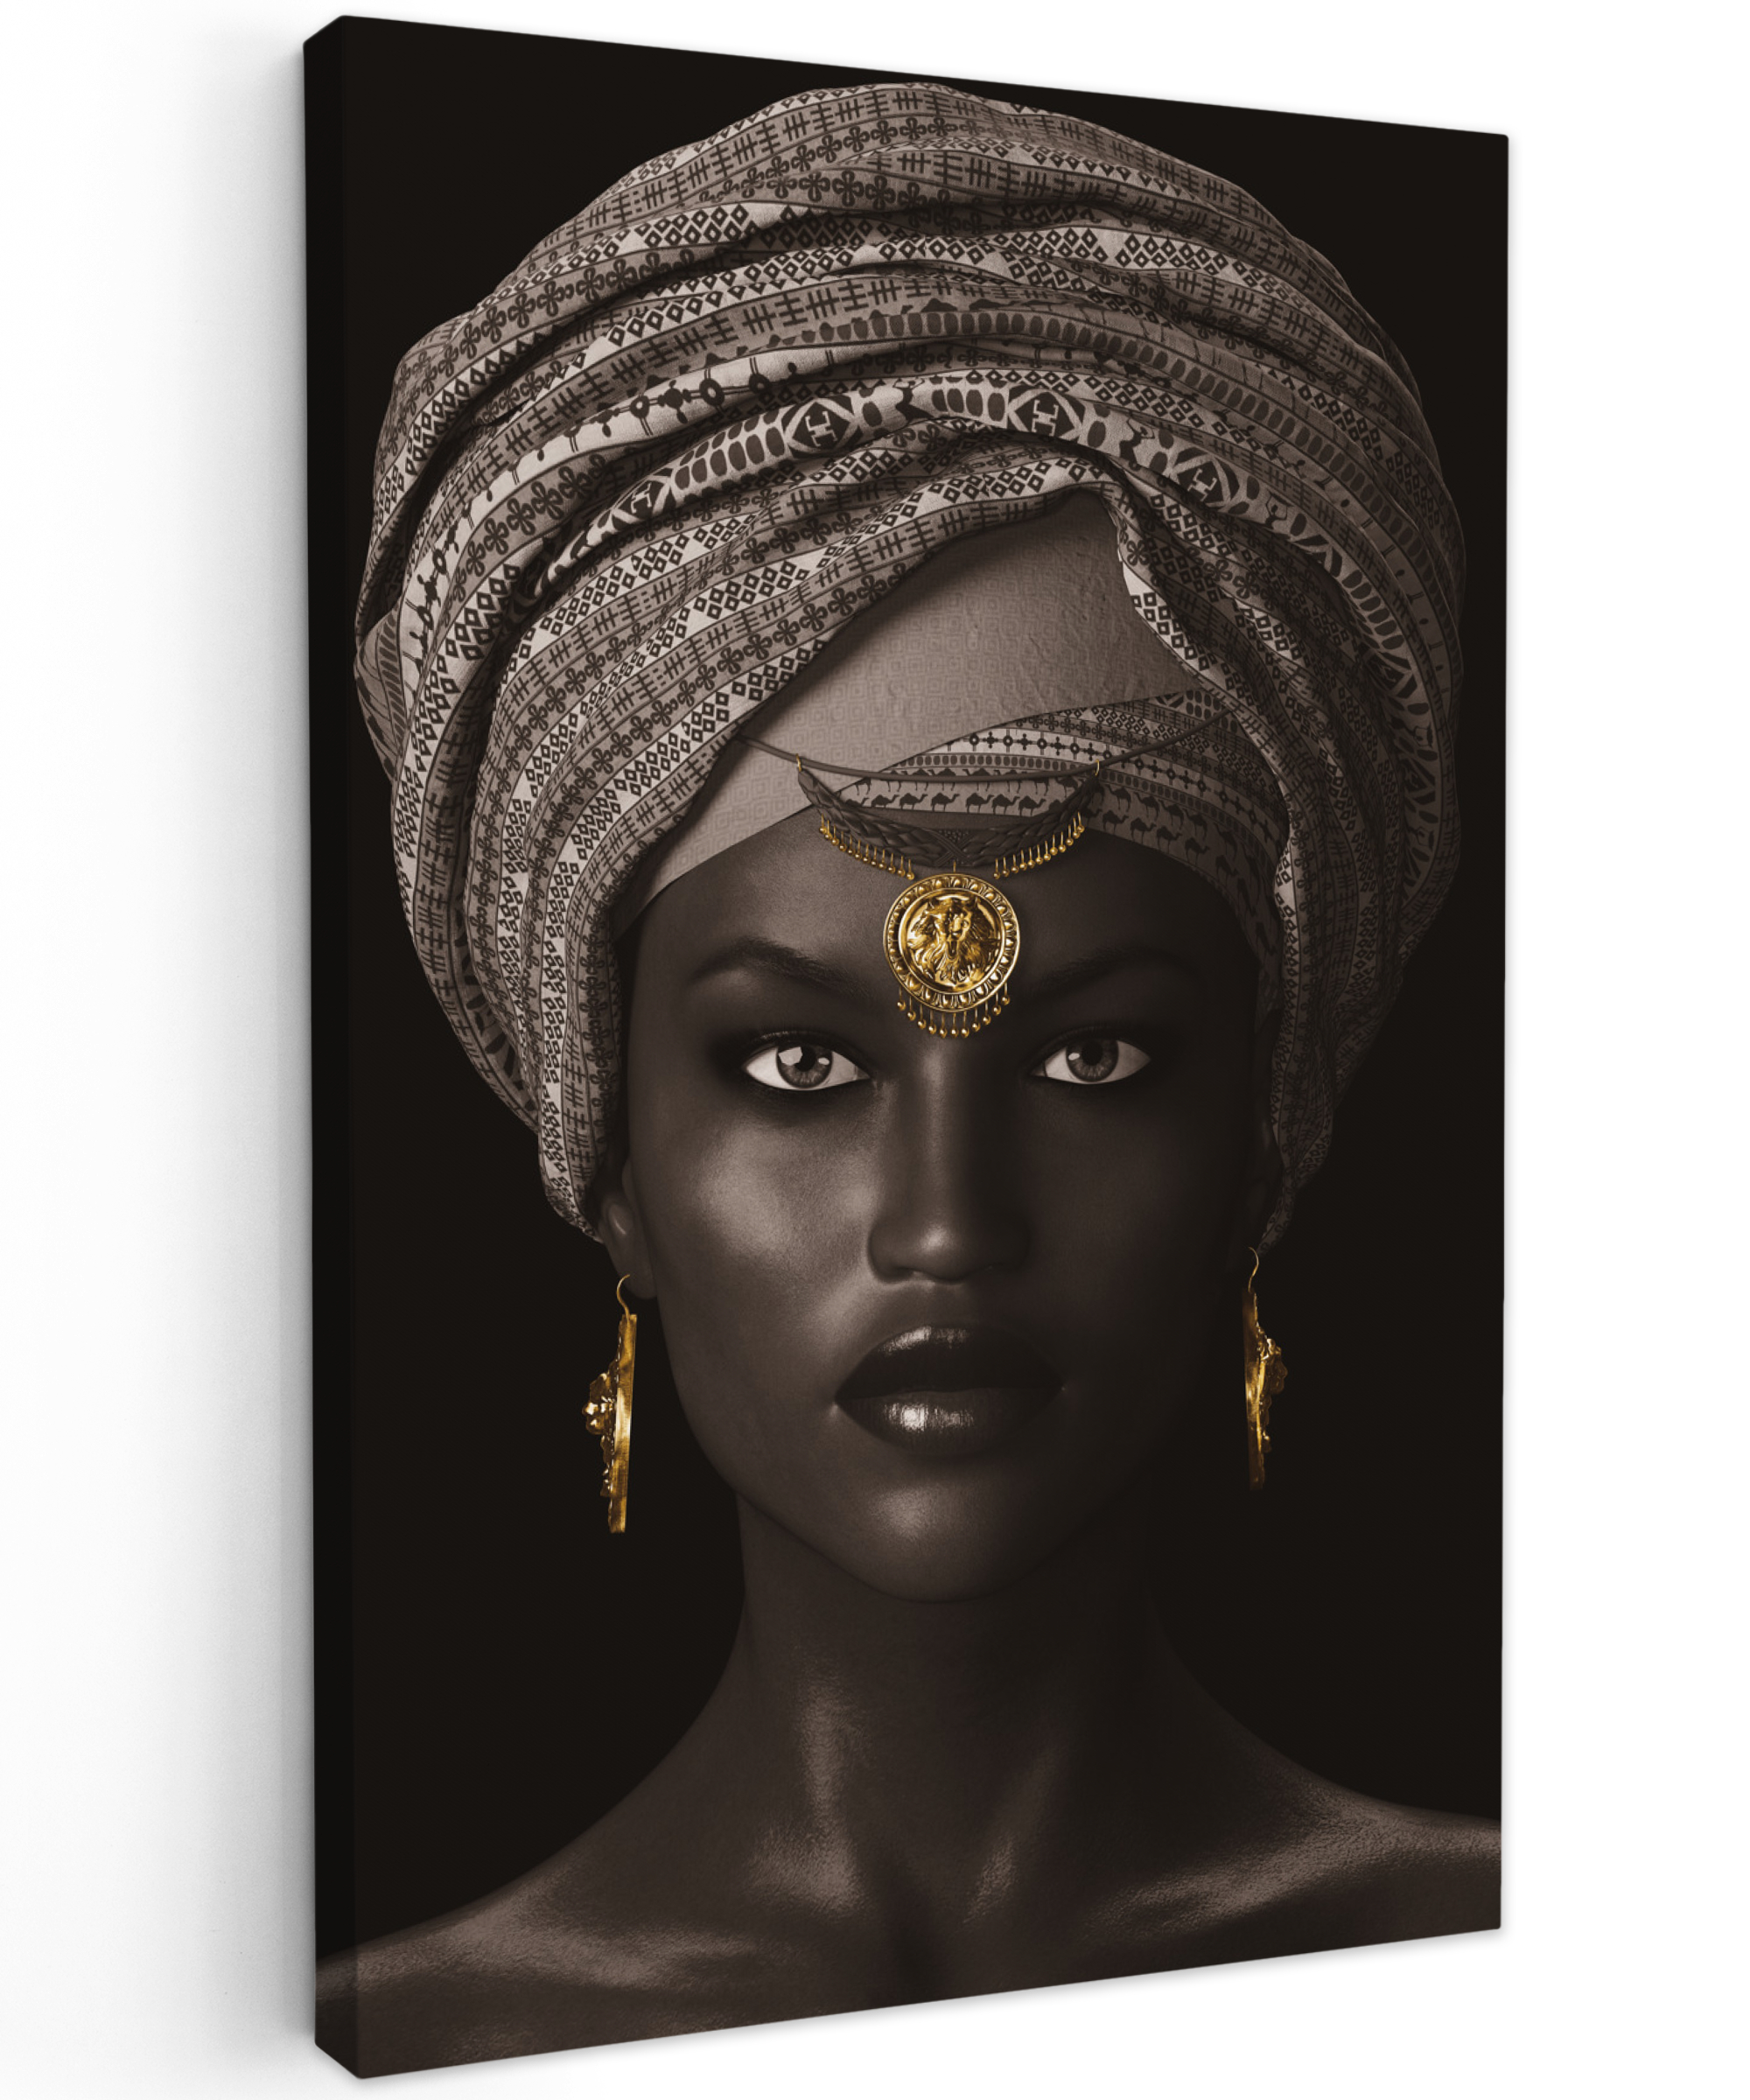 Tableau sur toile - Femme - Africaine - Or